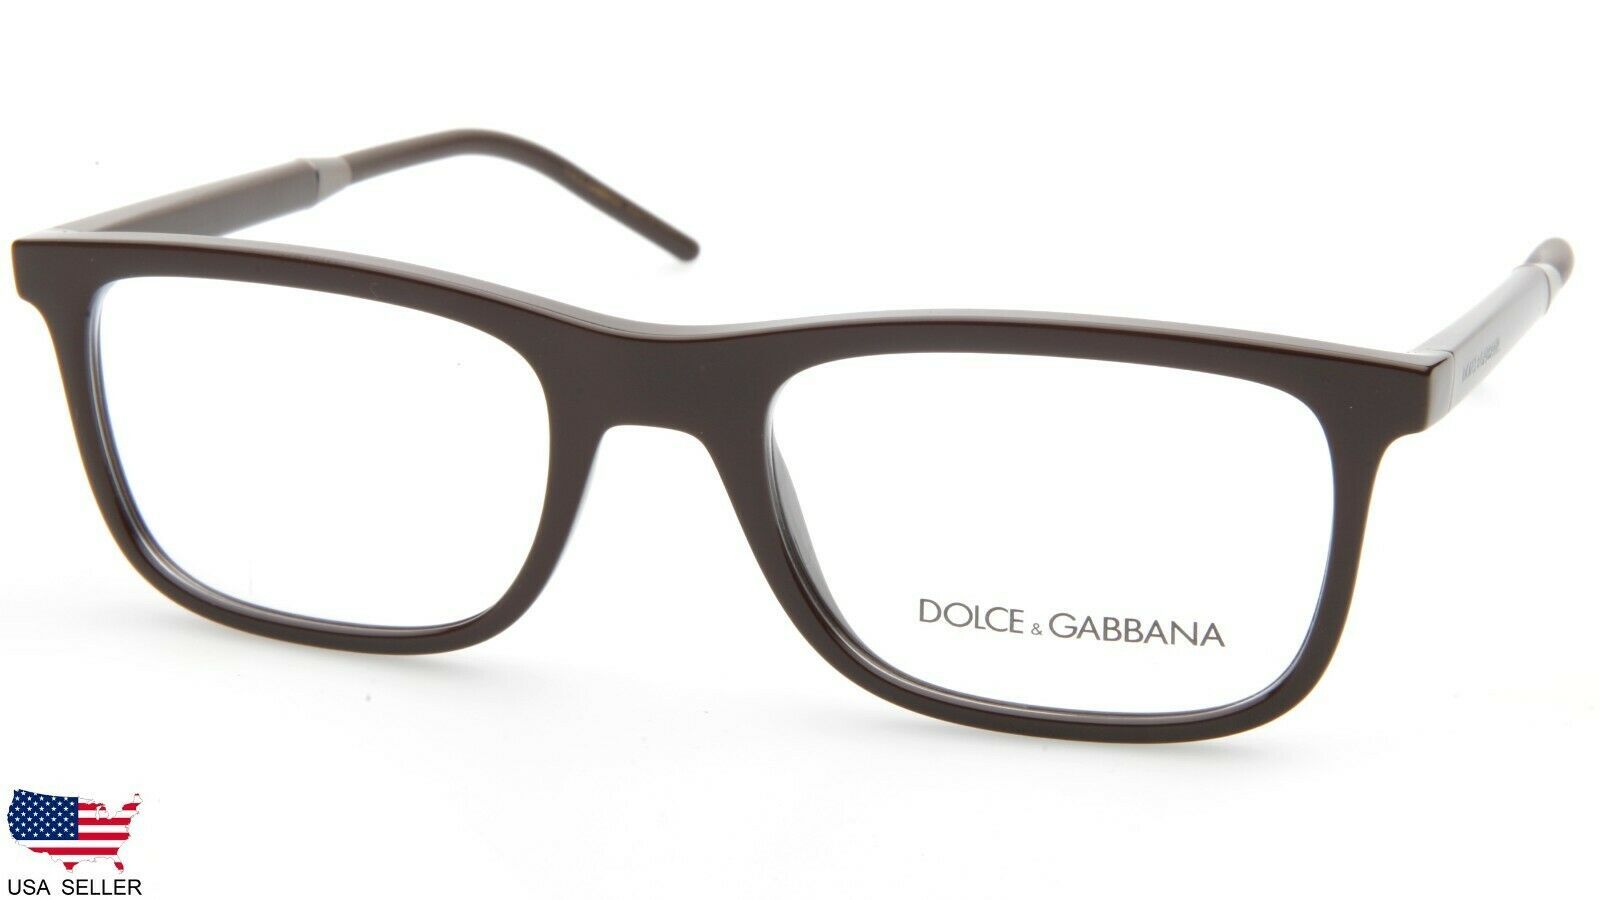 Primary image for D&G Dolce&Gabbana DG 5030 3042 BROWN EYEGLASSES DISPLAY MODEL 53-20-140 Italy...